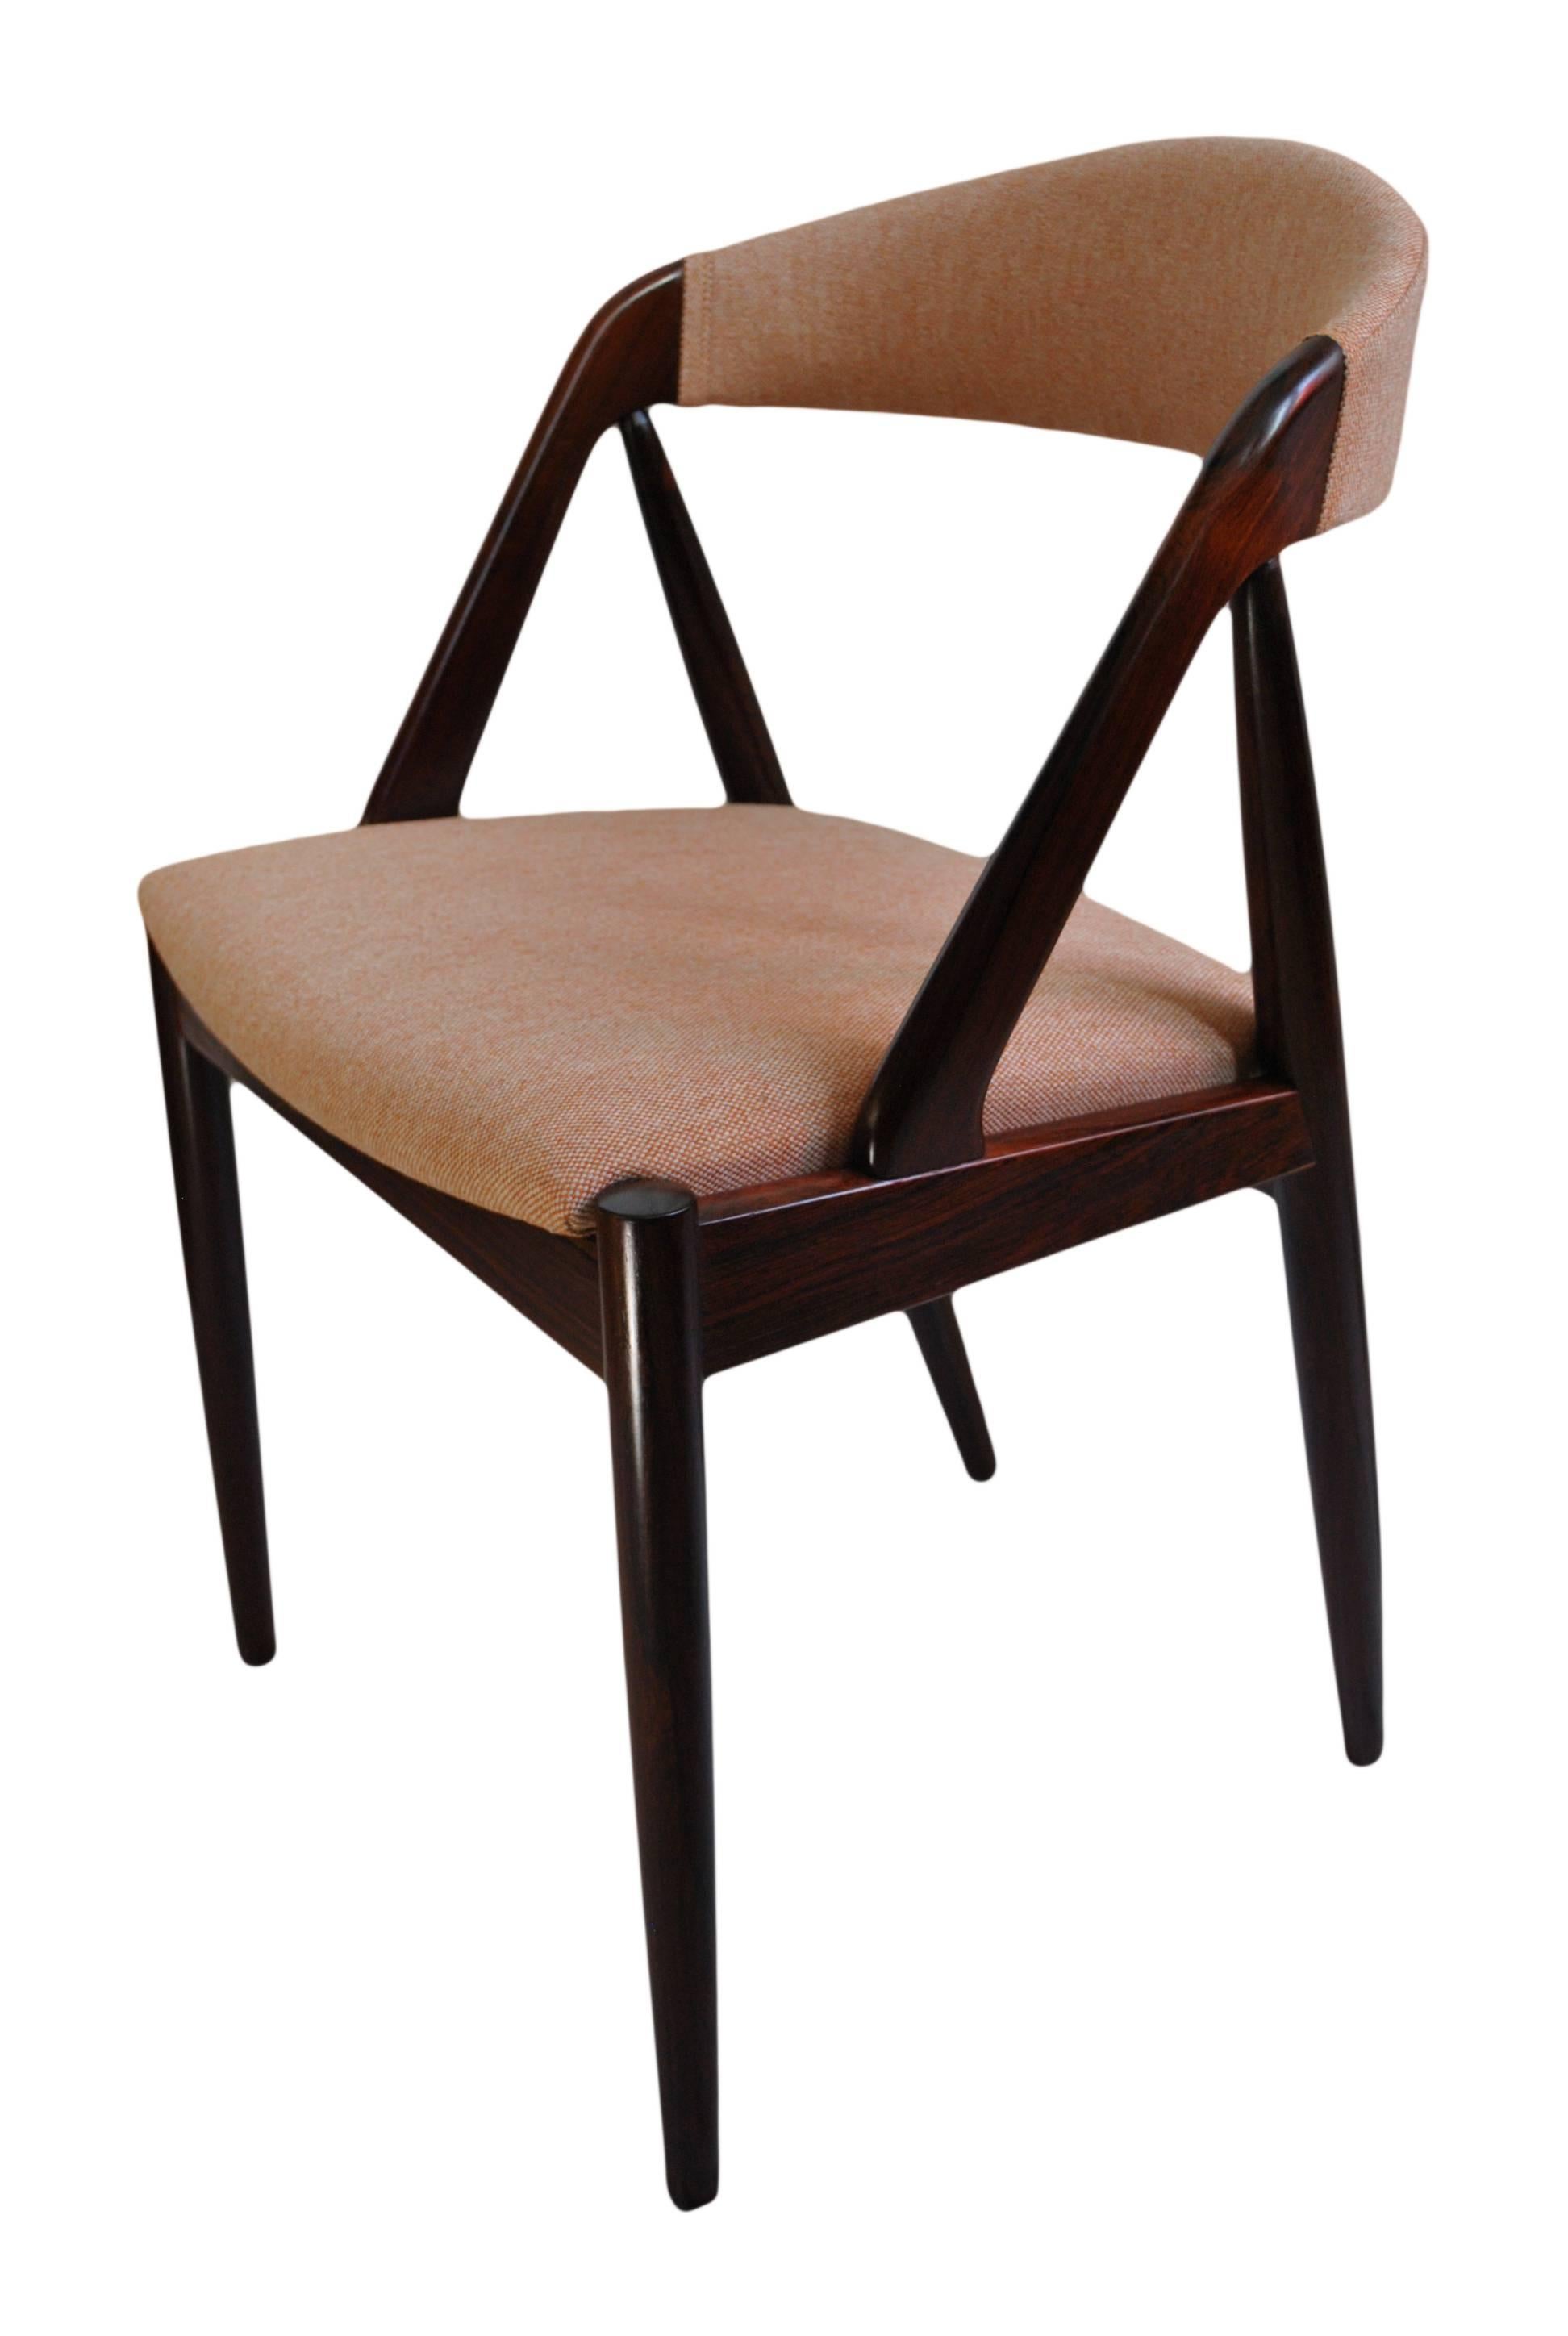 Danish Kai Kristiansen Dining Chairs, Refurbished and reupholstered.